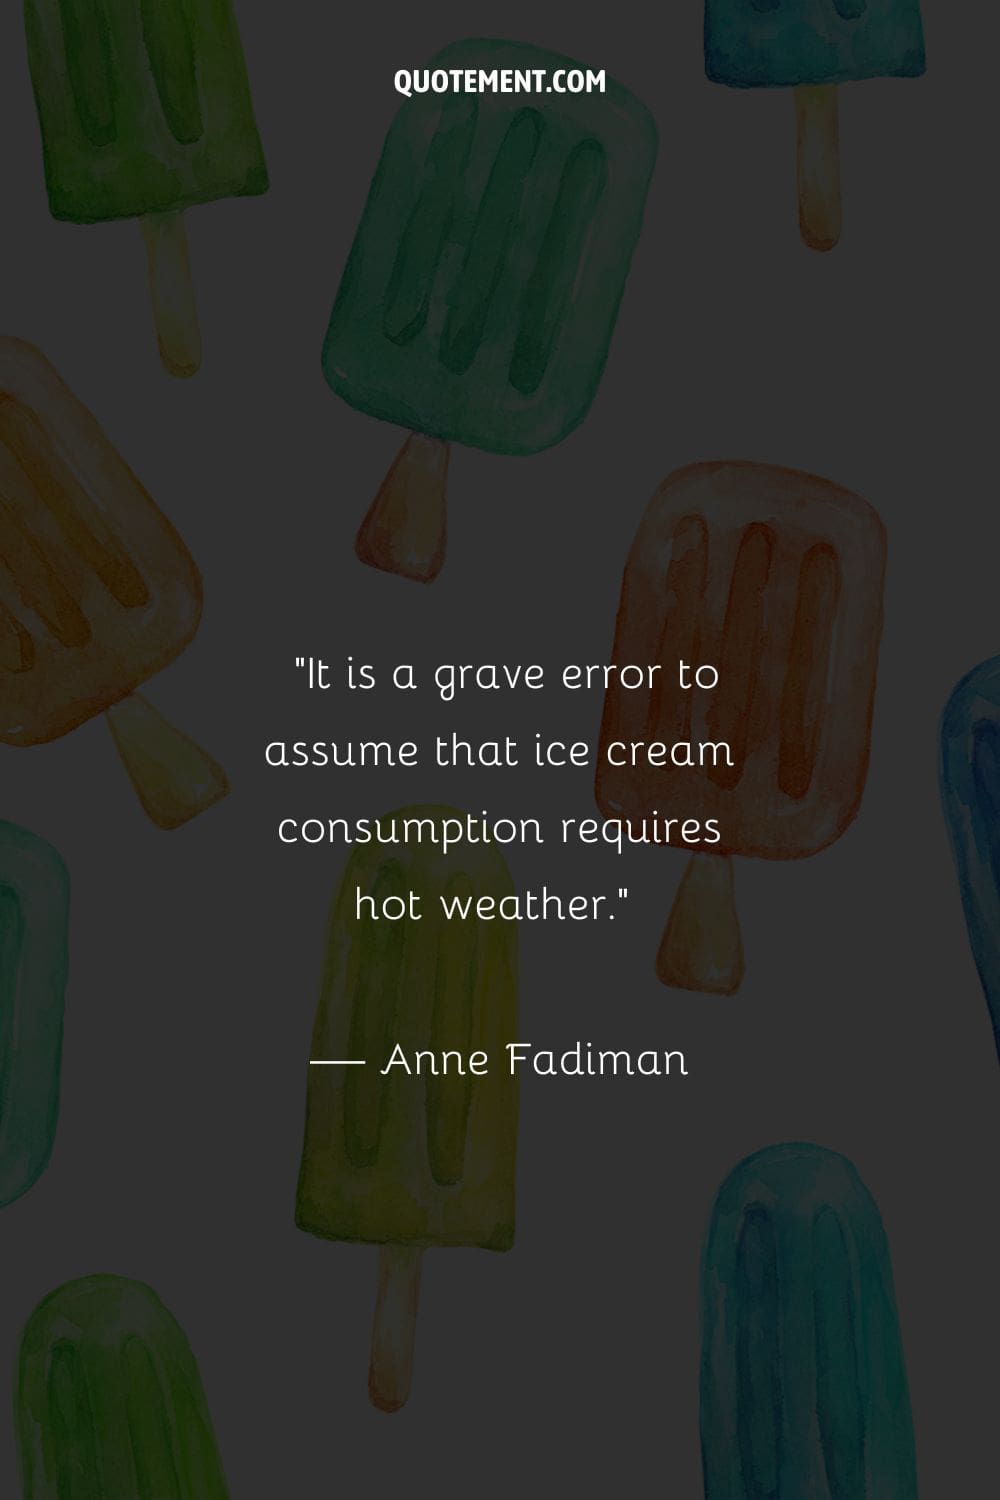 Colorful ice creams illustration representing the greatest ice cream quote.
